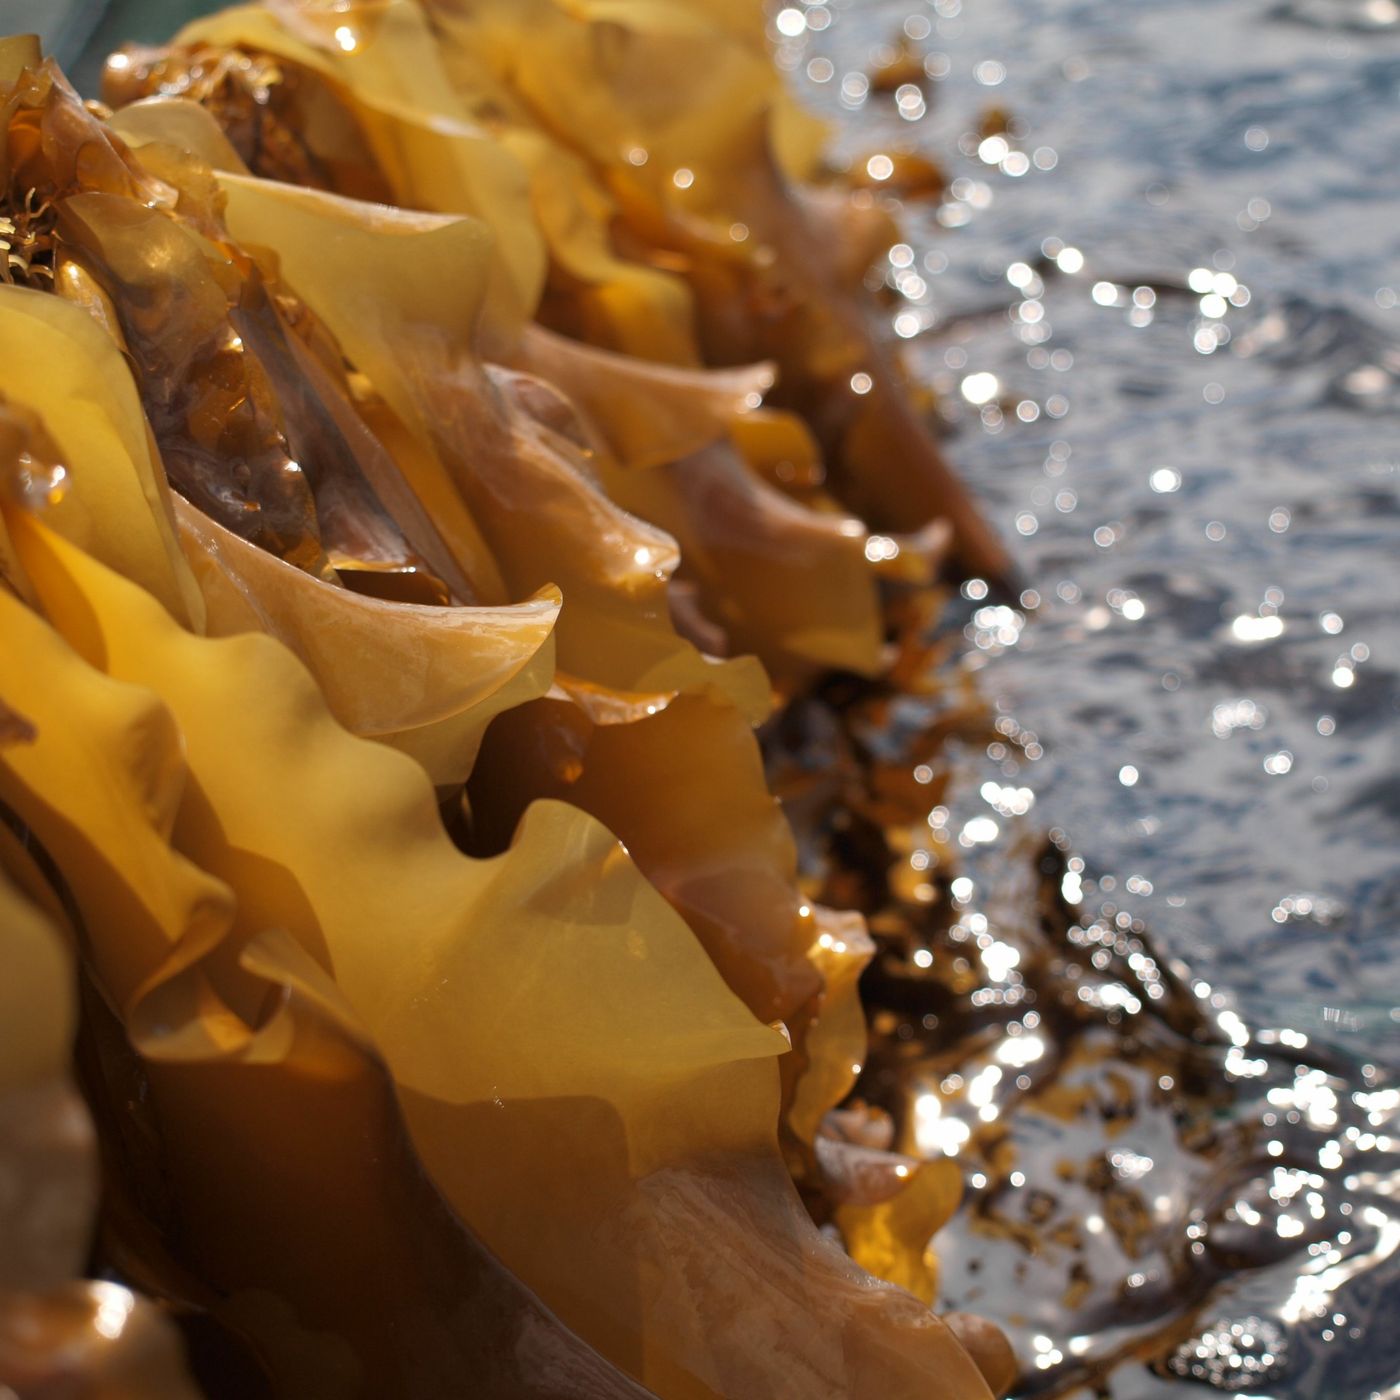 Spis havet - en madrevolution venter under vandoverfladen